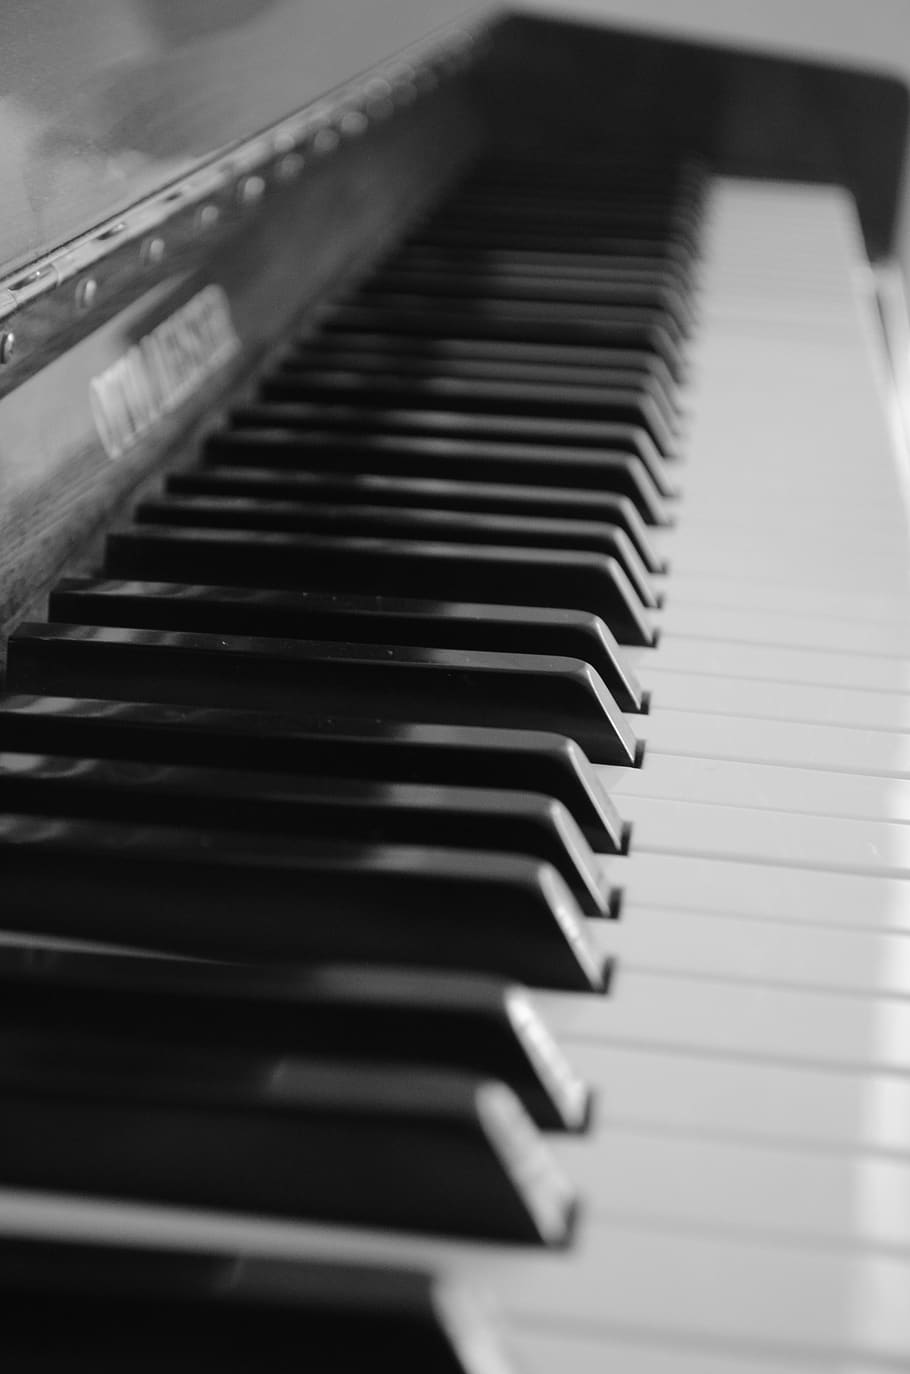 piano keyboard download free